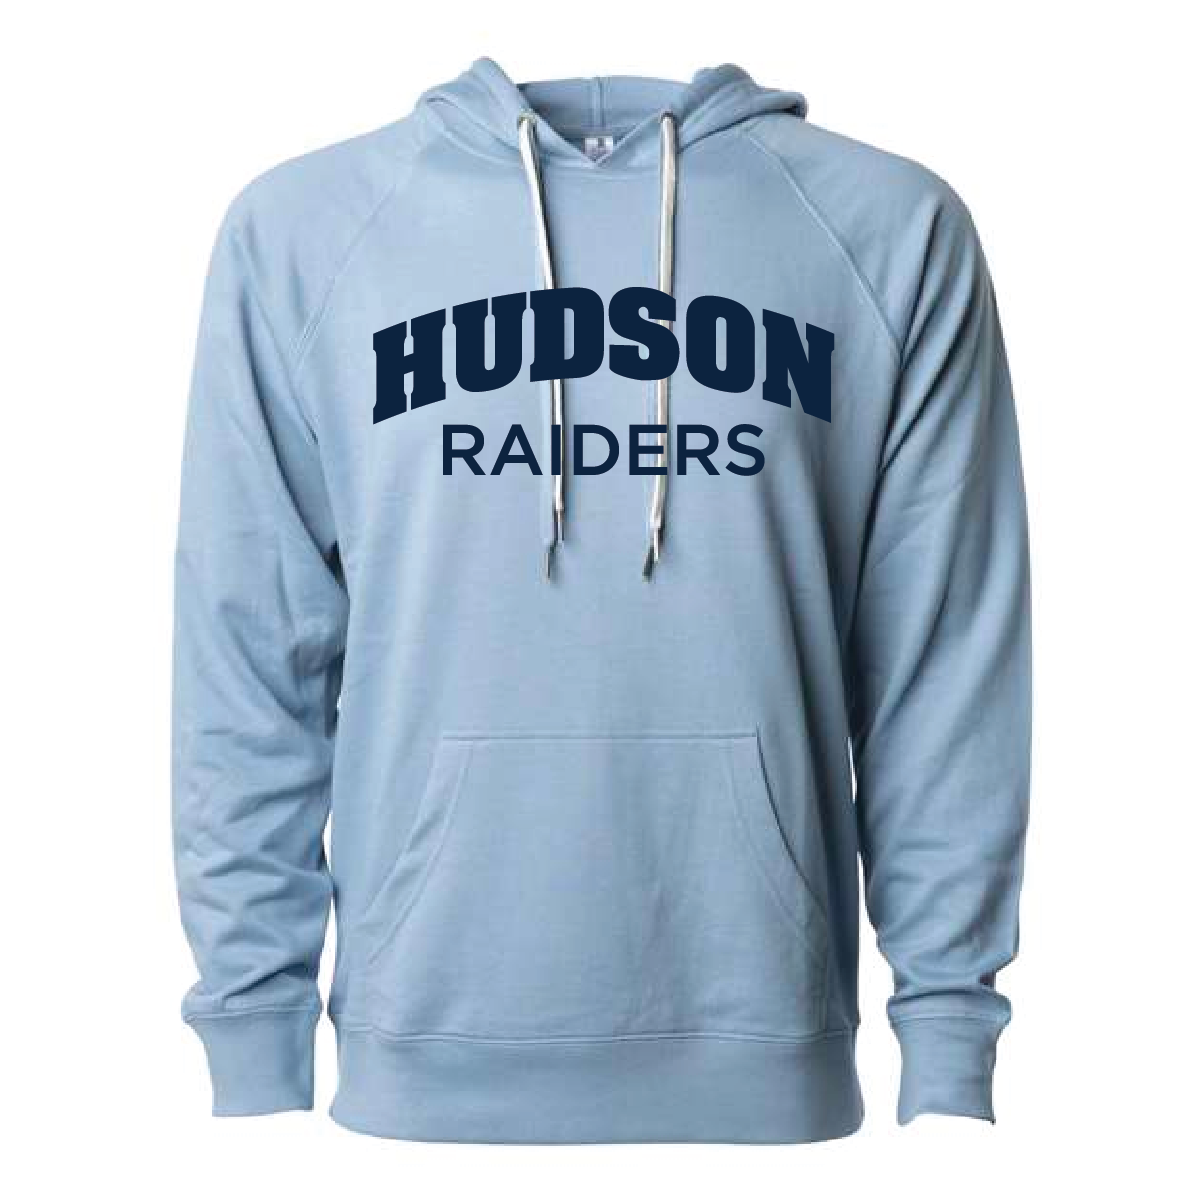 Hudson Raiders Icon Lightweight Loopback Terry Hooded Sweatshirt